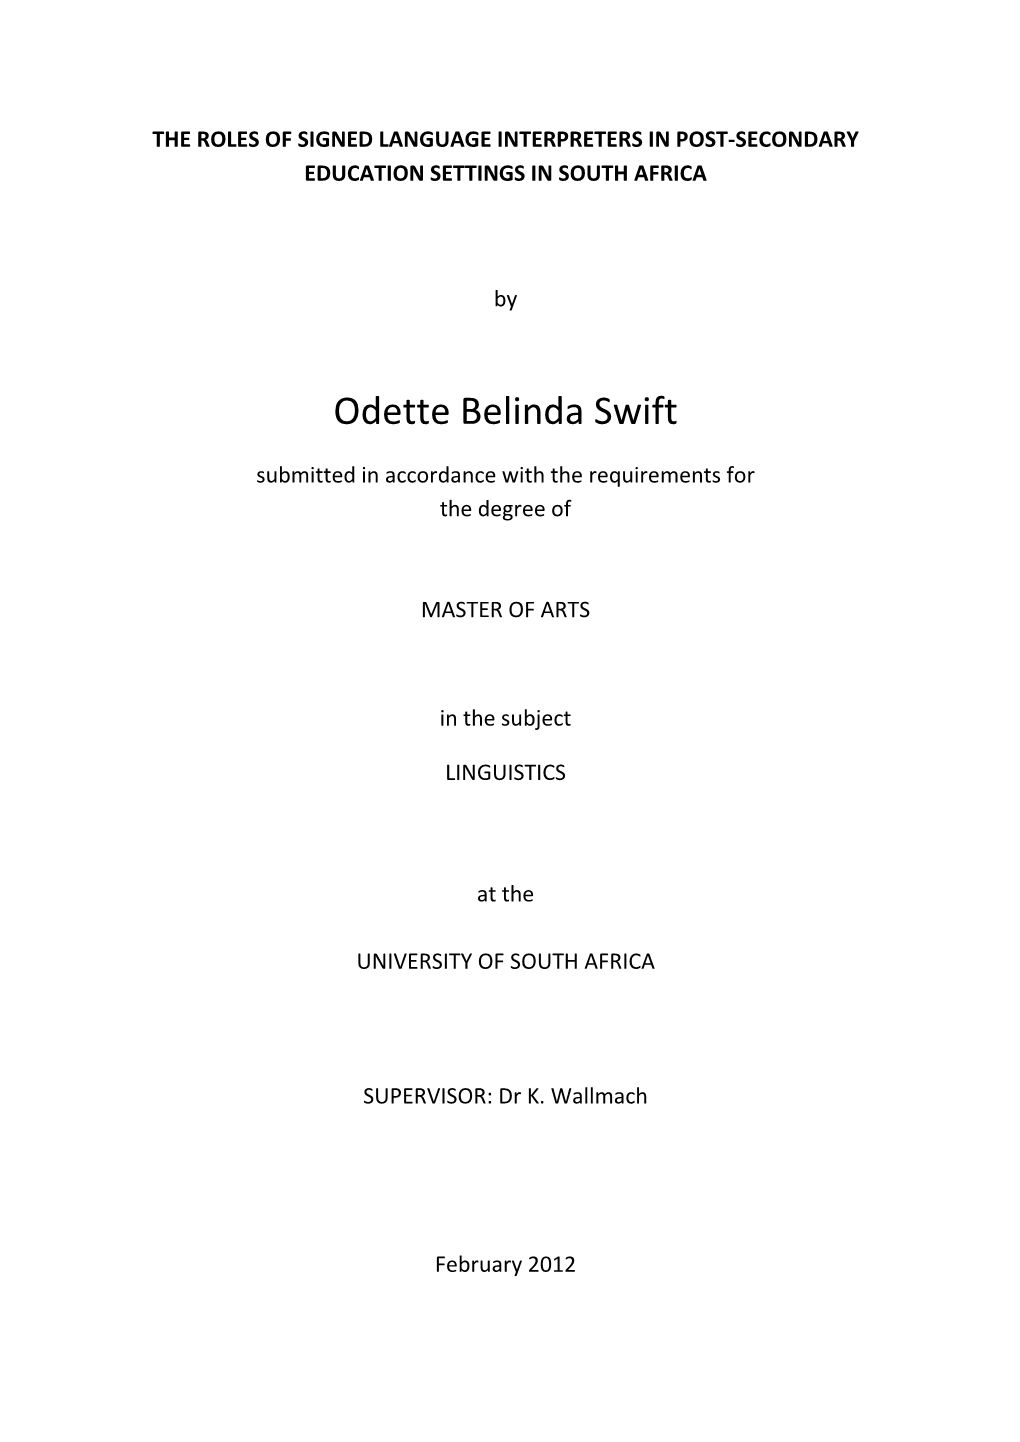 Odette Belinda Swift